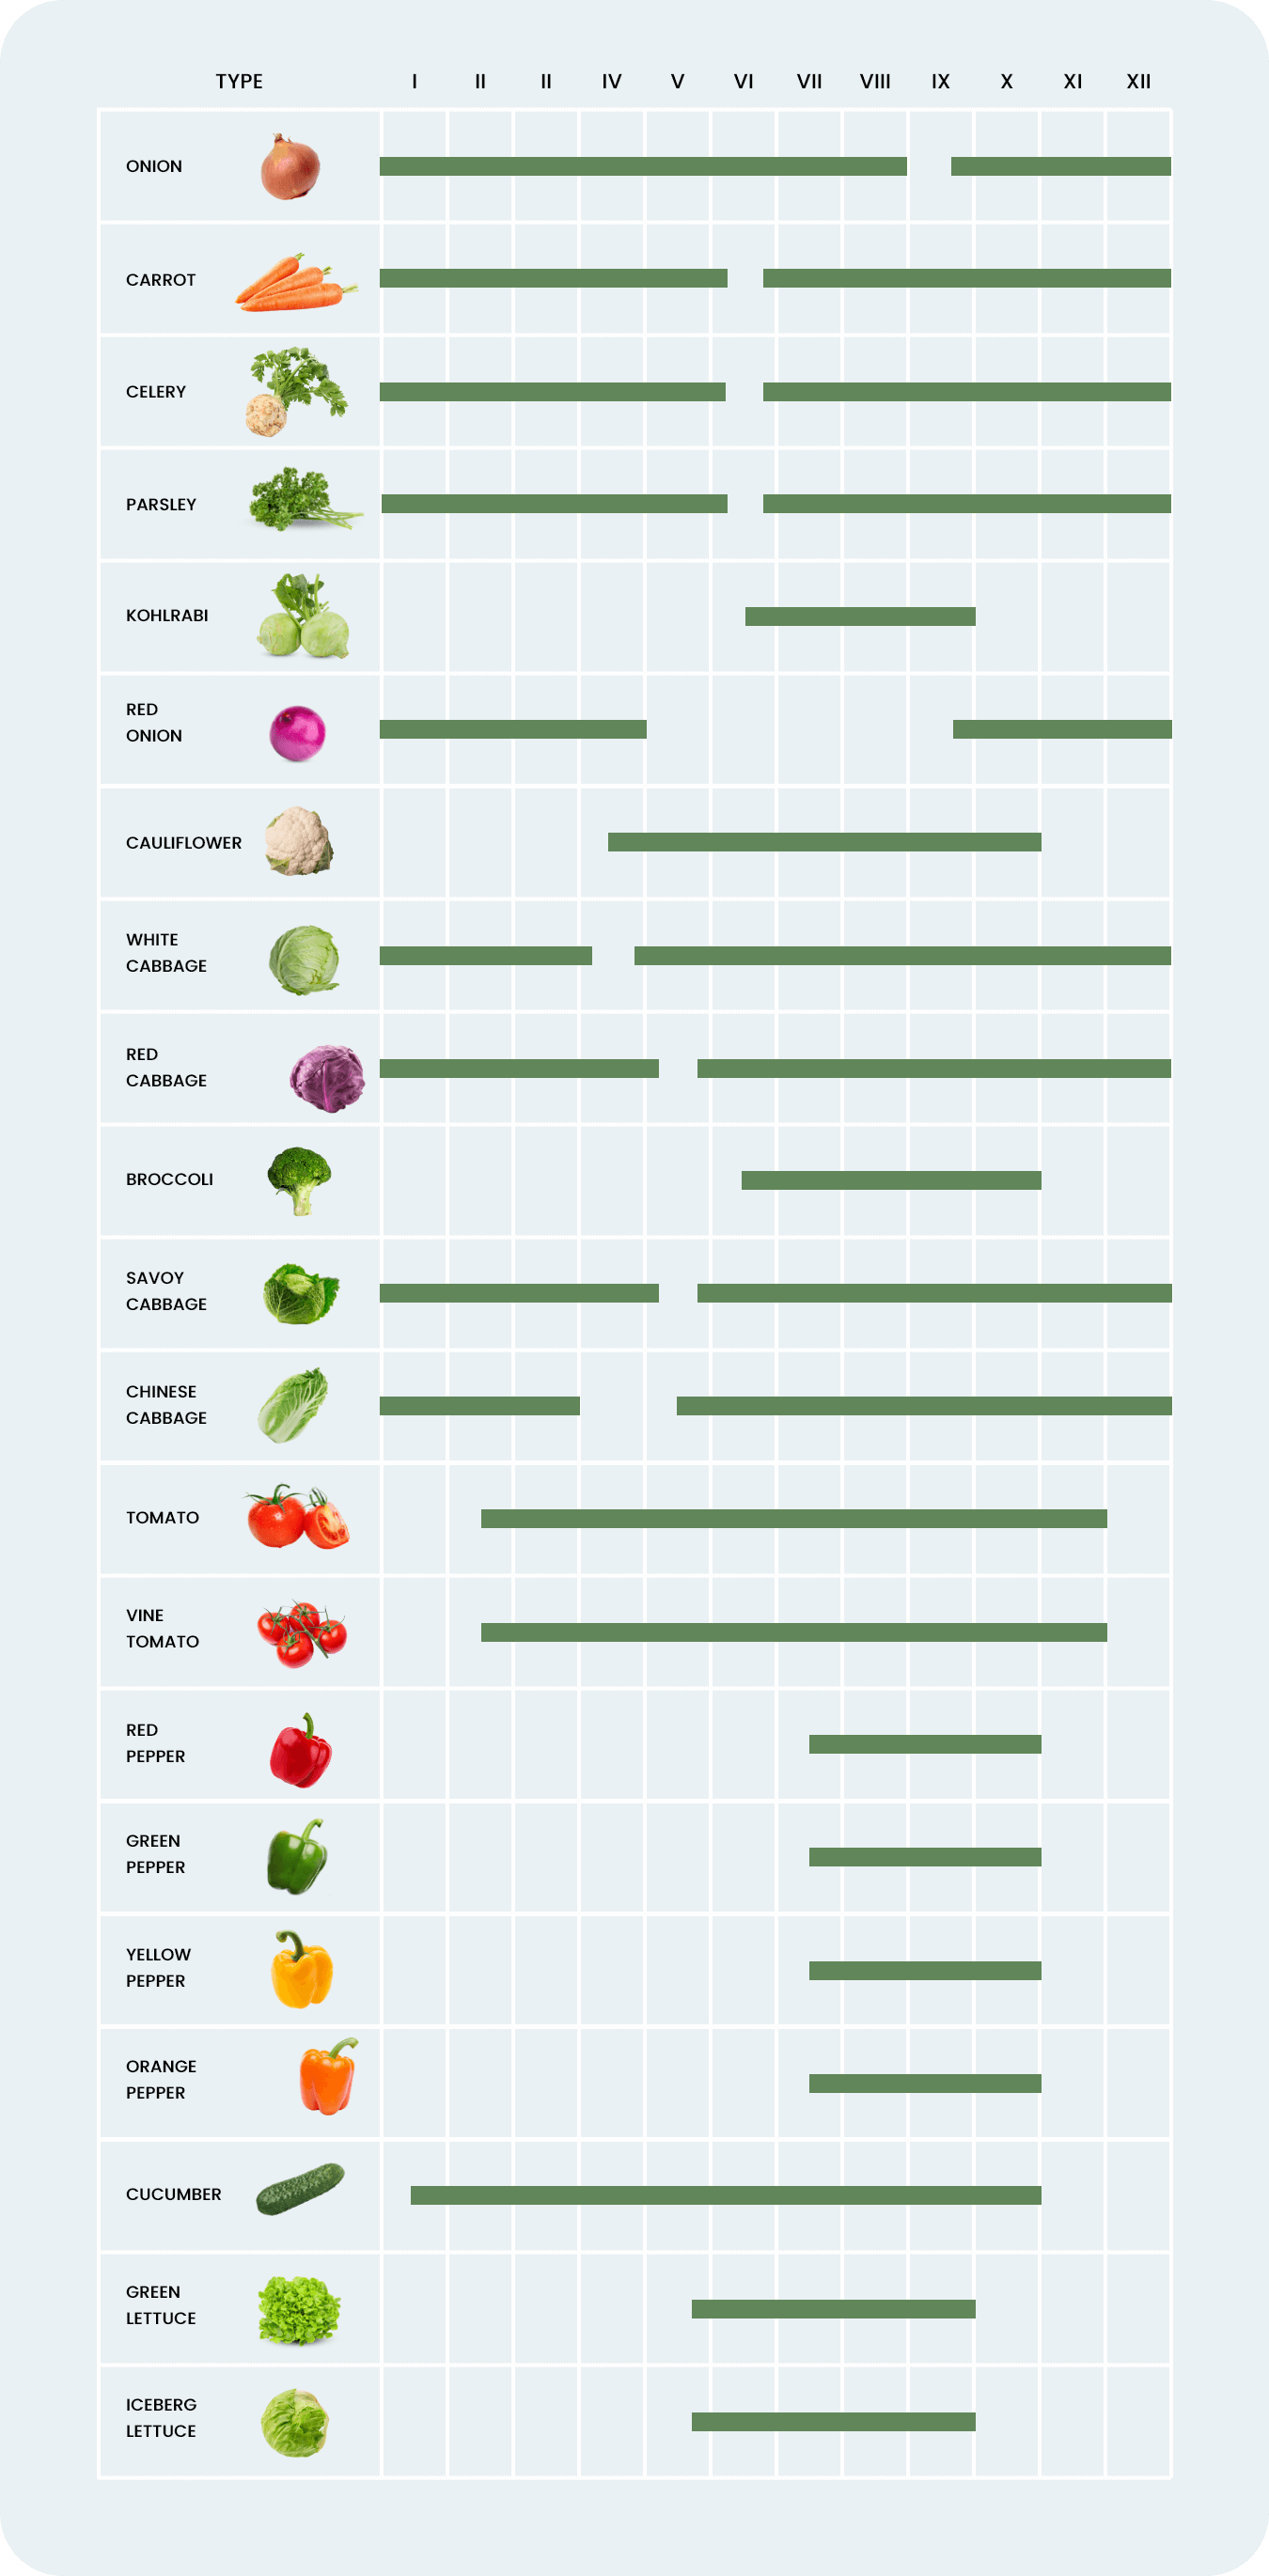 warzywa-krajowe-tabela-sezonowosci-EN